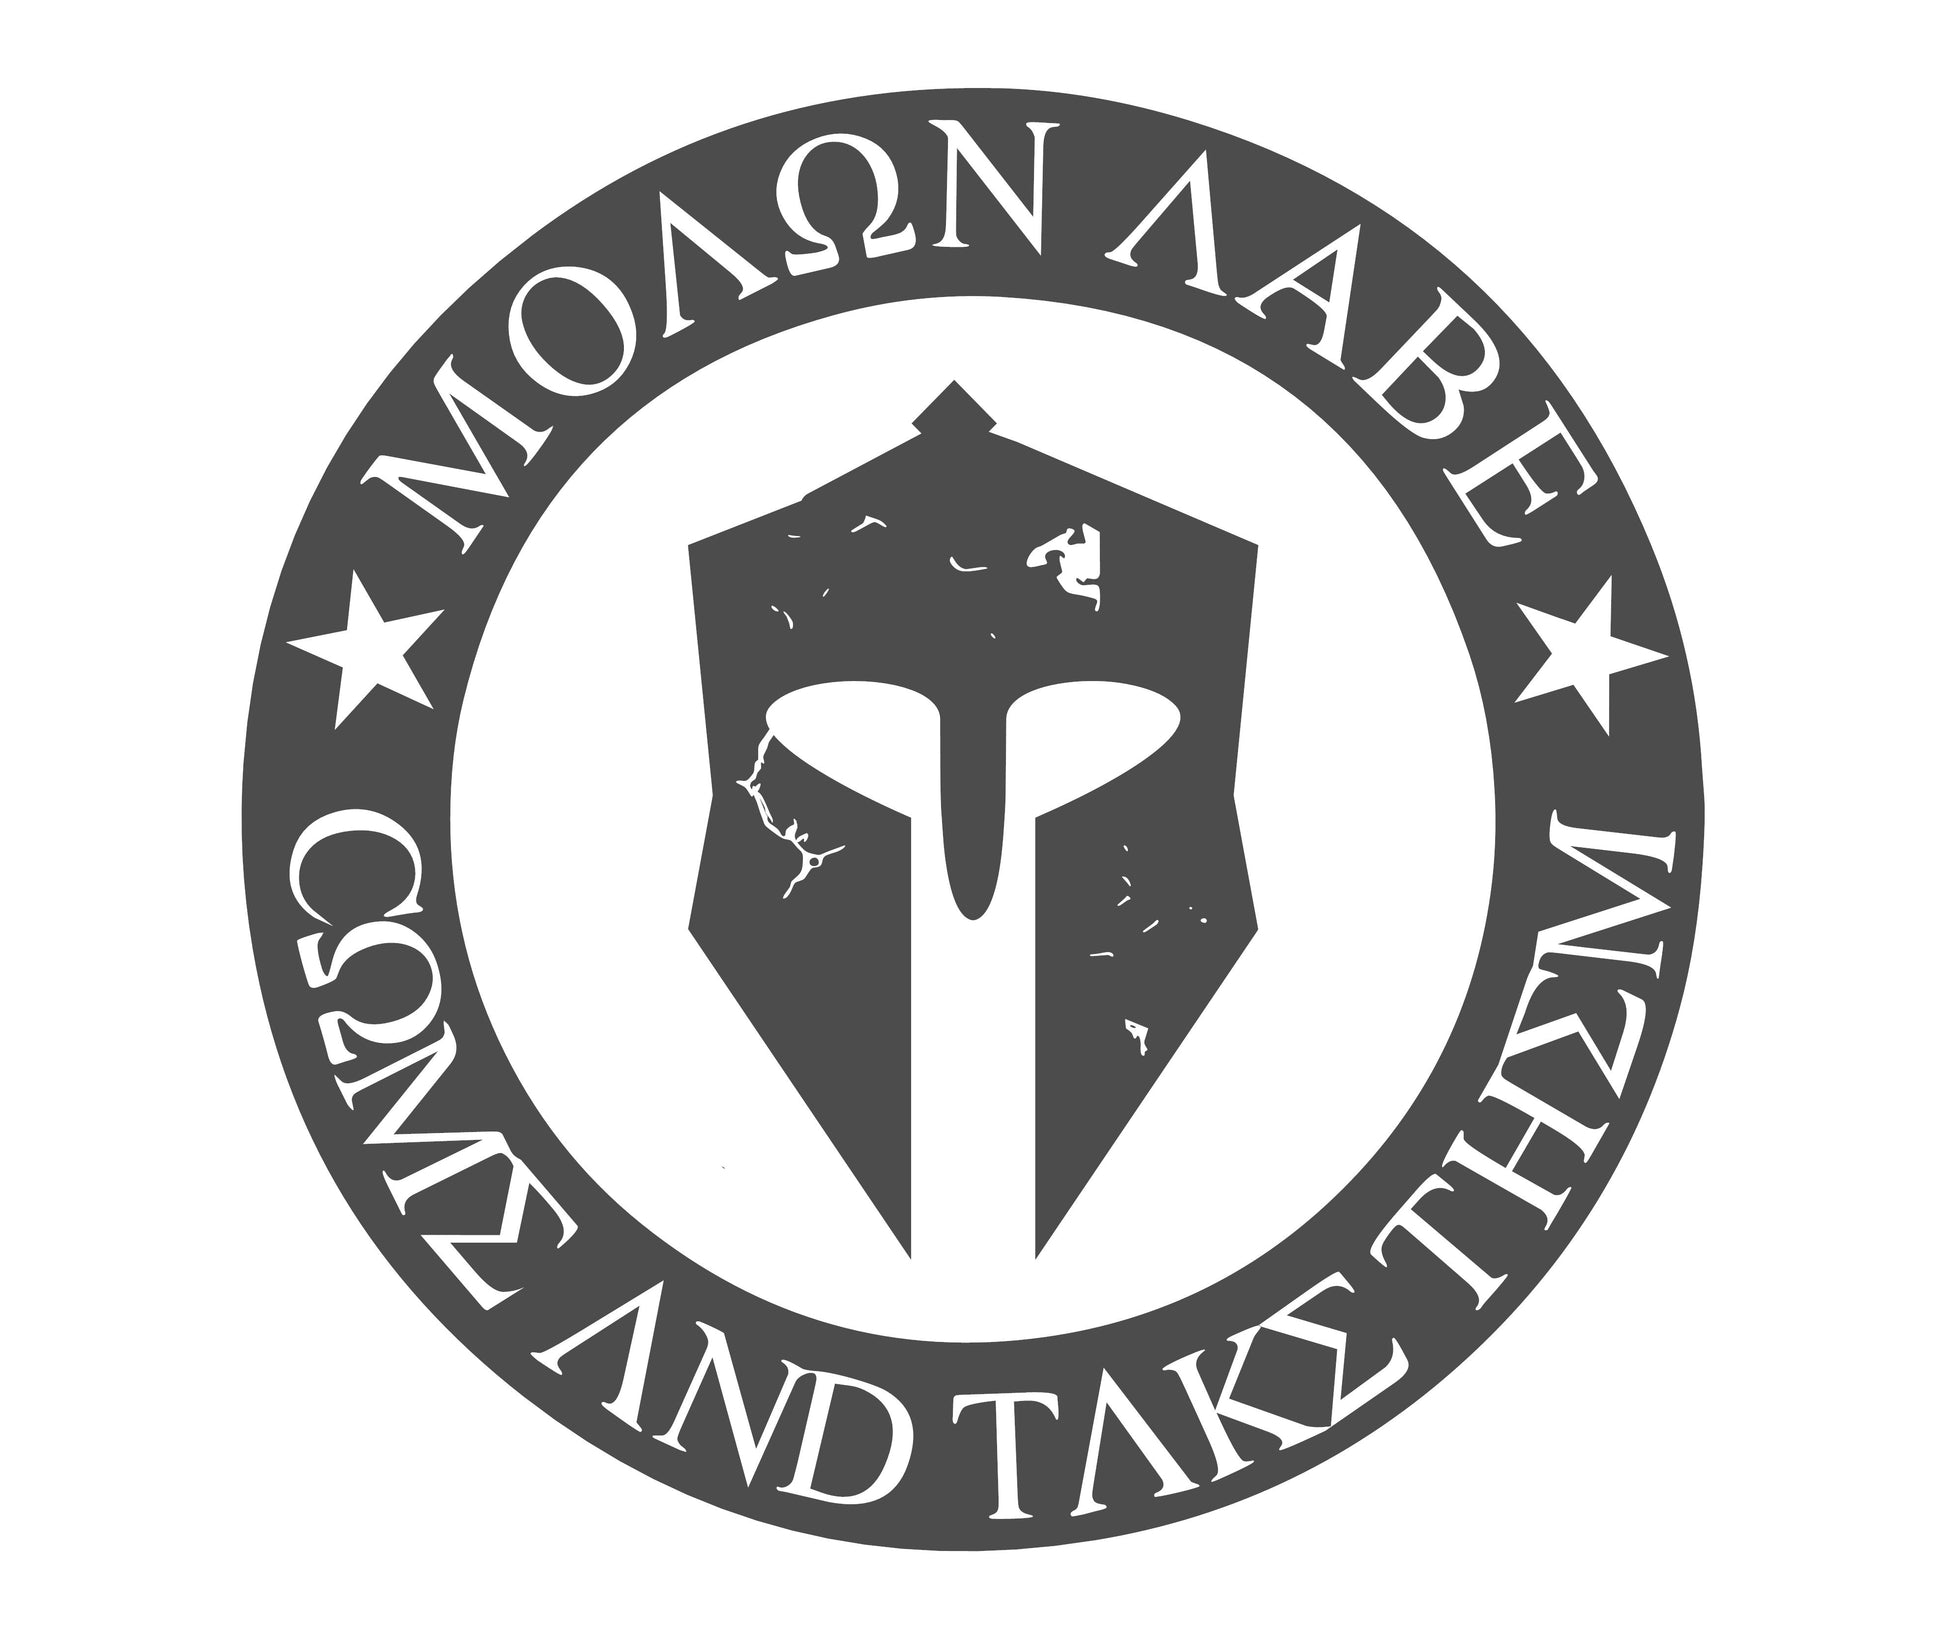 Molon Labe "Come and Take Them" Gun Rights 2nd Amendment Rights Vinyl Decal Stickers